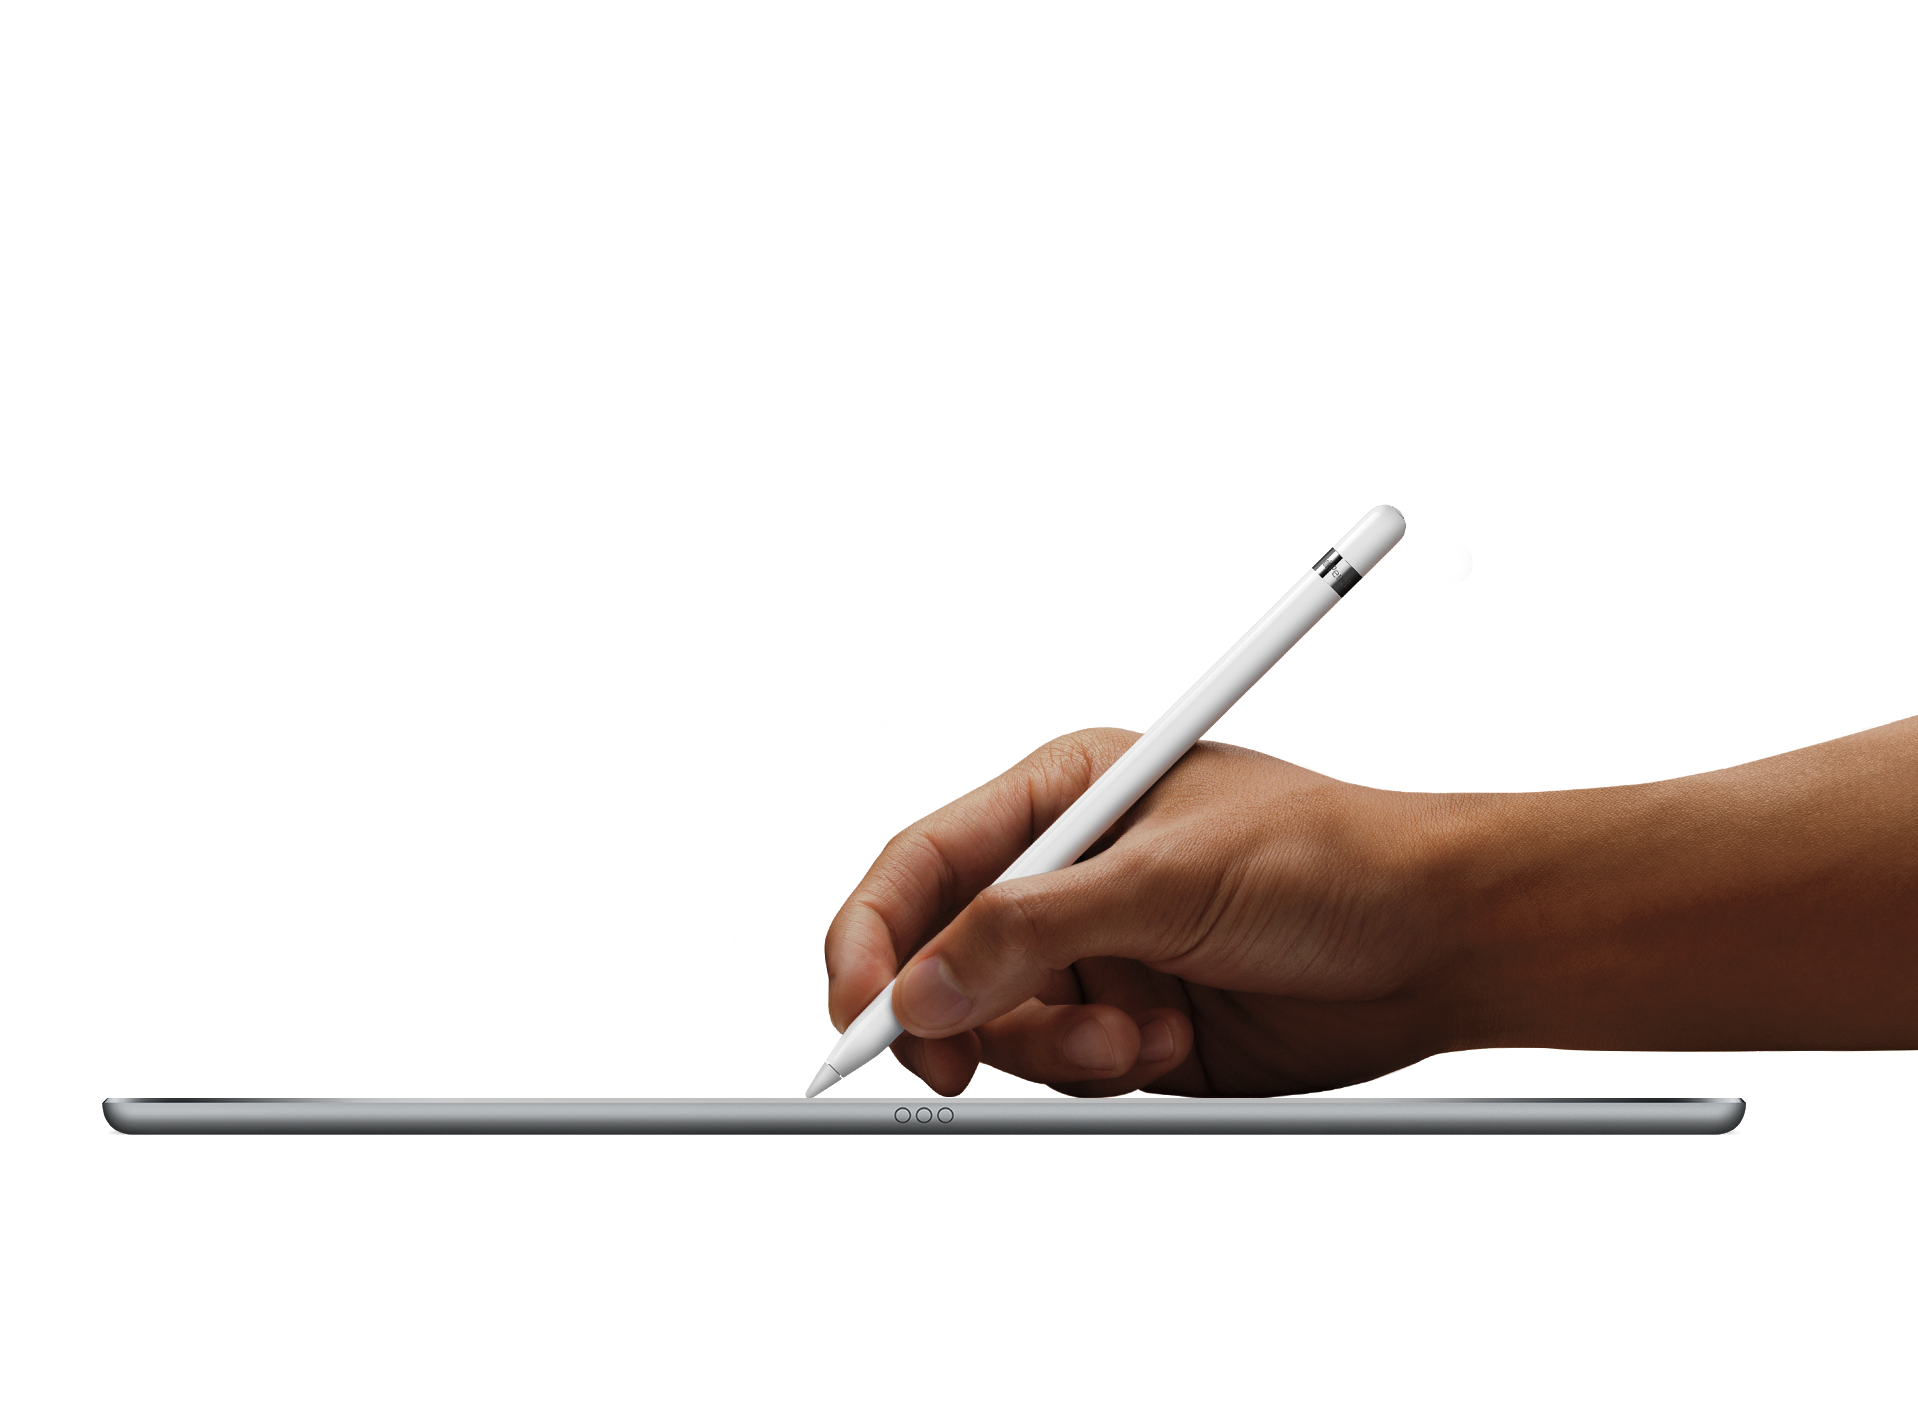 iPad Pro and Apple Pencil